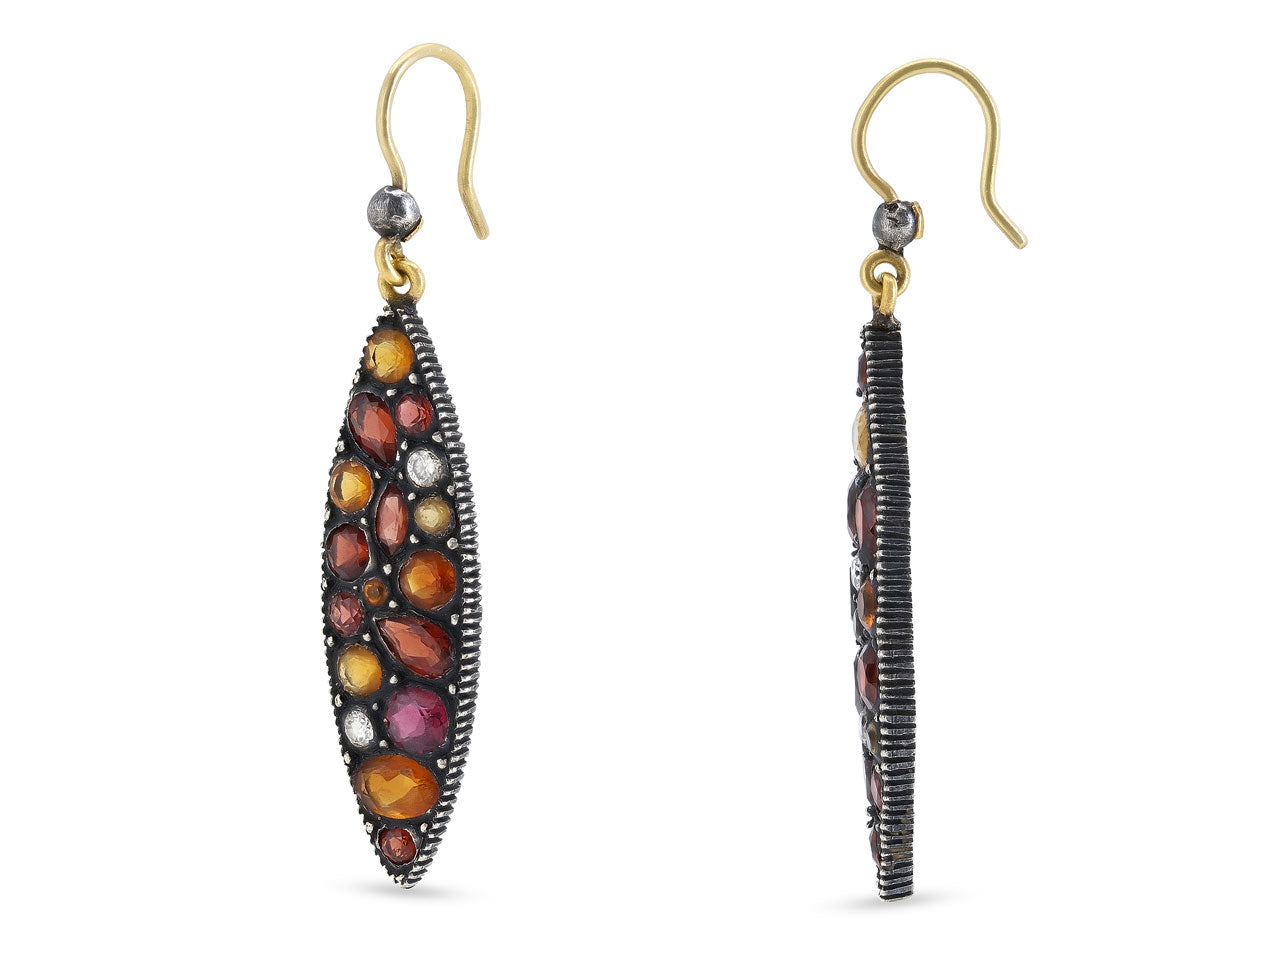 Multi-Colored Gemstone Earrings in Blackened Silver, by Yossi Harari